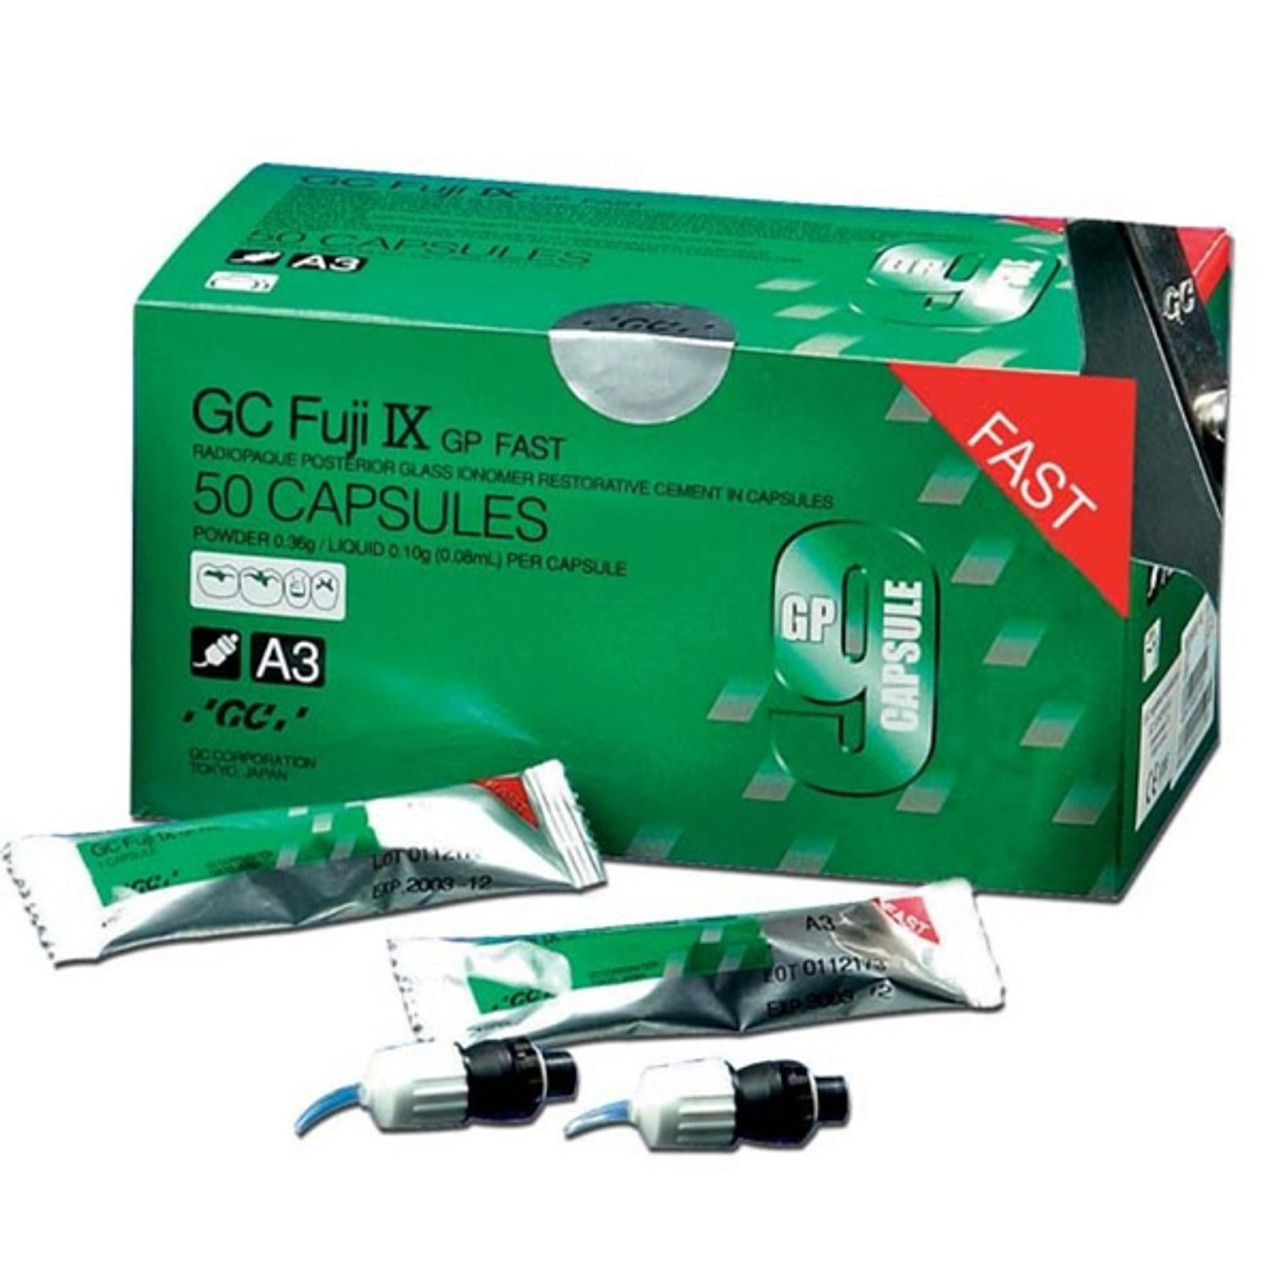 GC America - Fuji IX GP Powder Refill